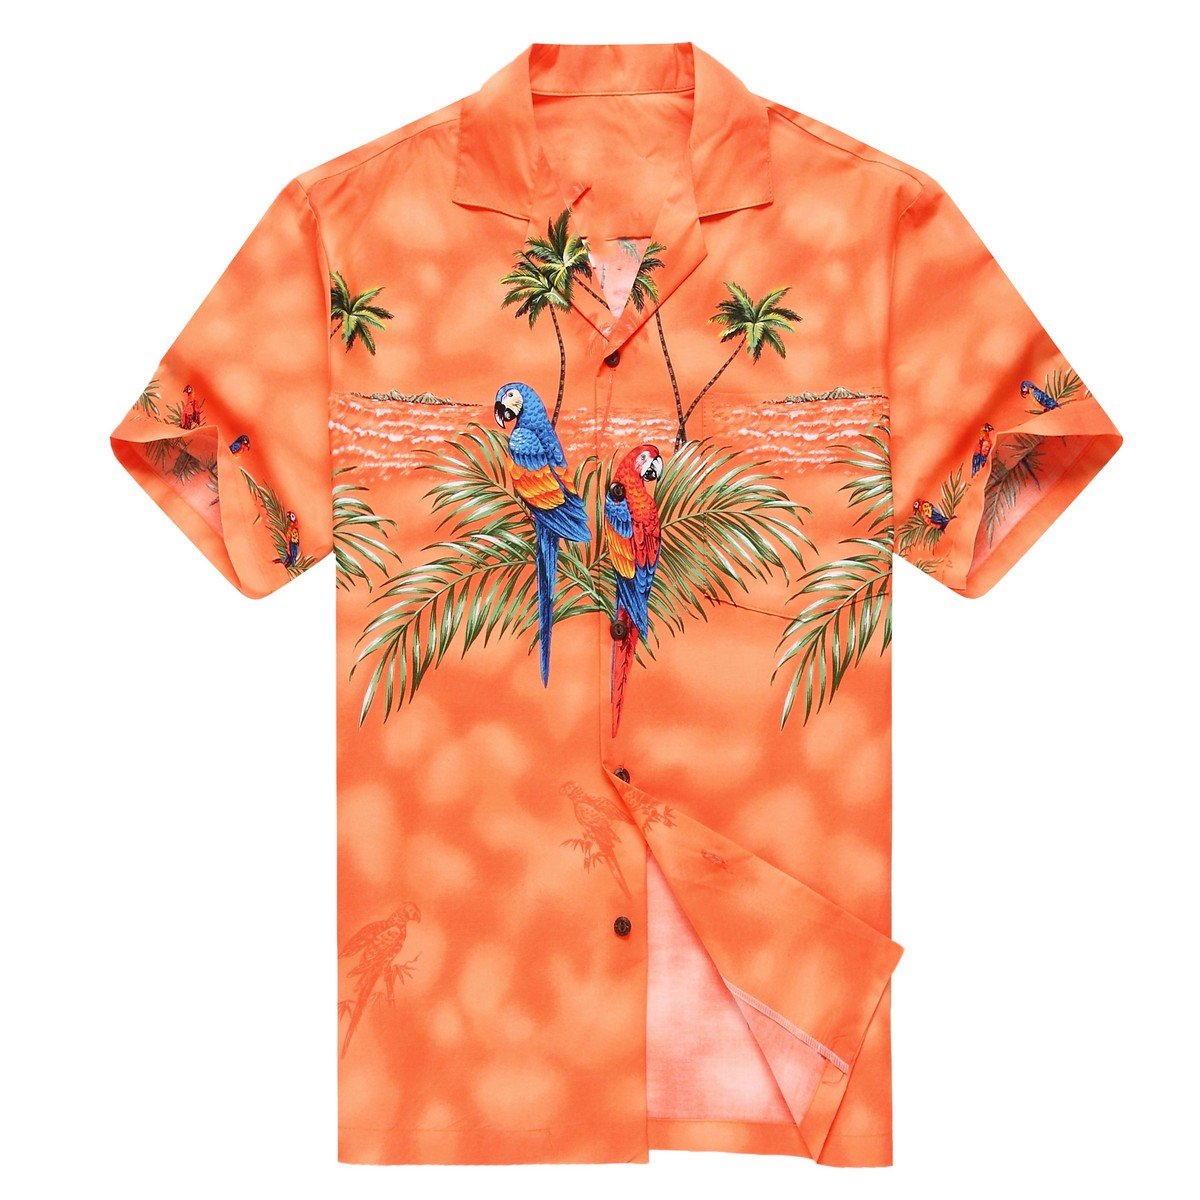 Men’s Aloha Shirt Orange with Matching Front Parrots